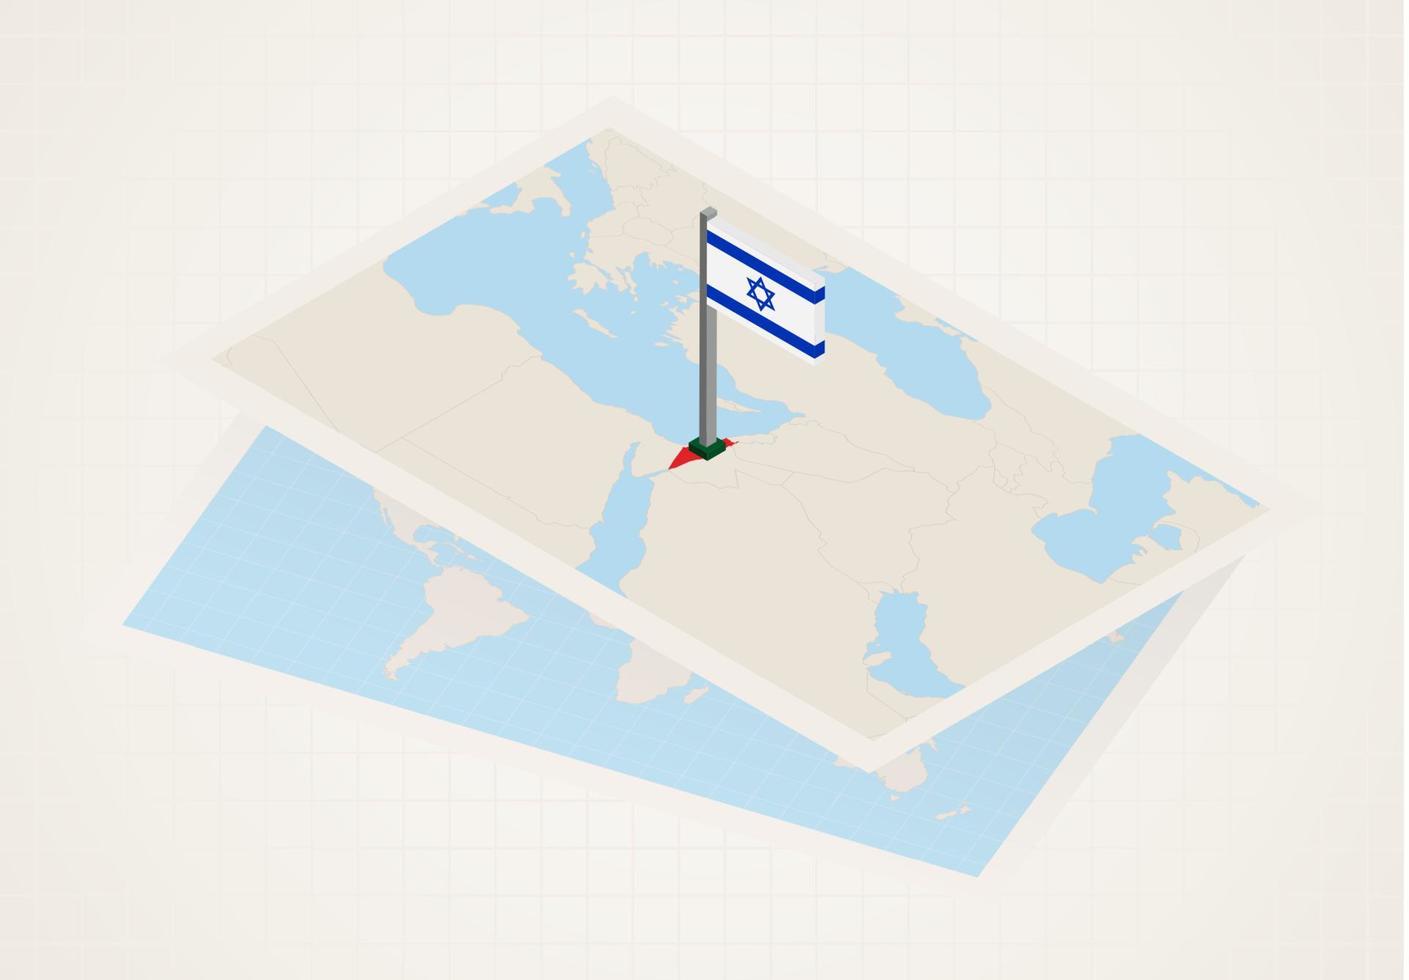 israel selecionado no mapa com bandeira isométrica de israel. vetor